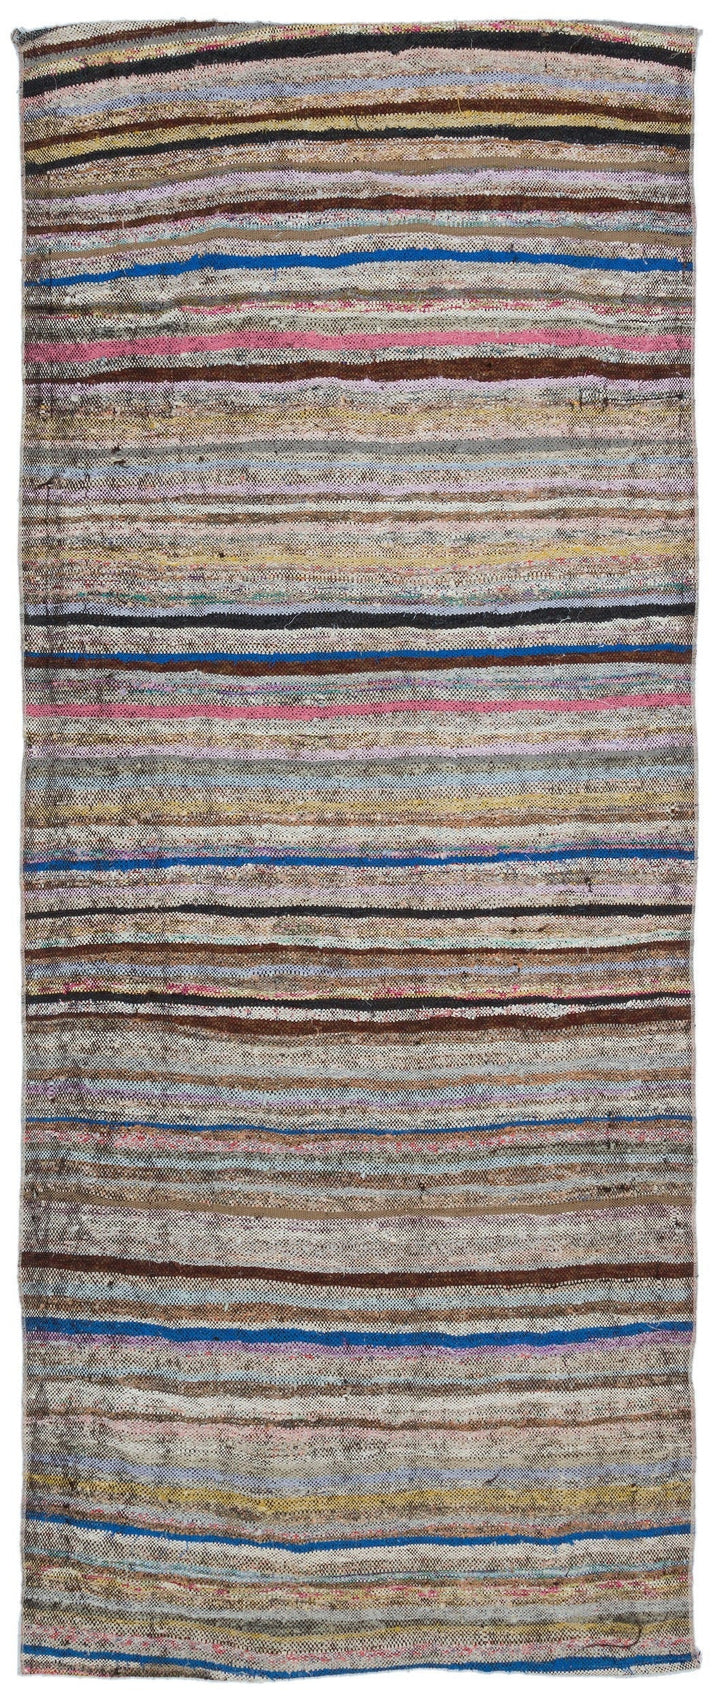 Cretan Beige Striped Wool Hand-Woven Carpet 113 x 273